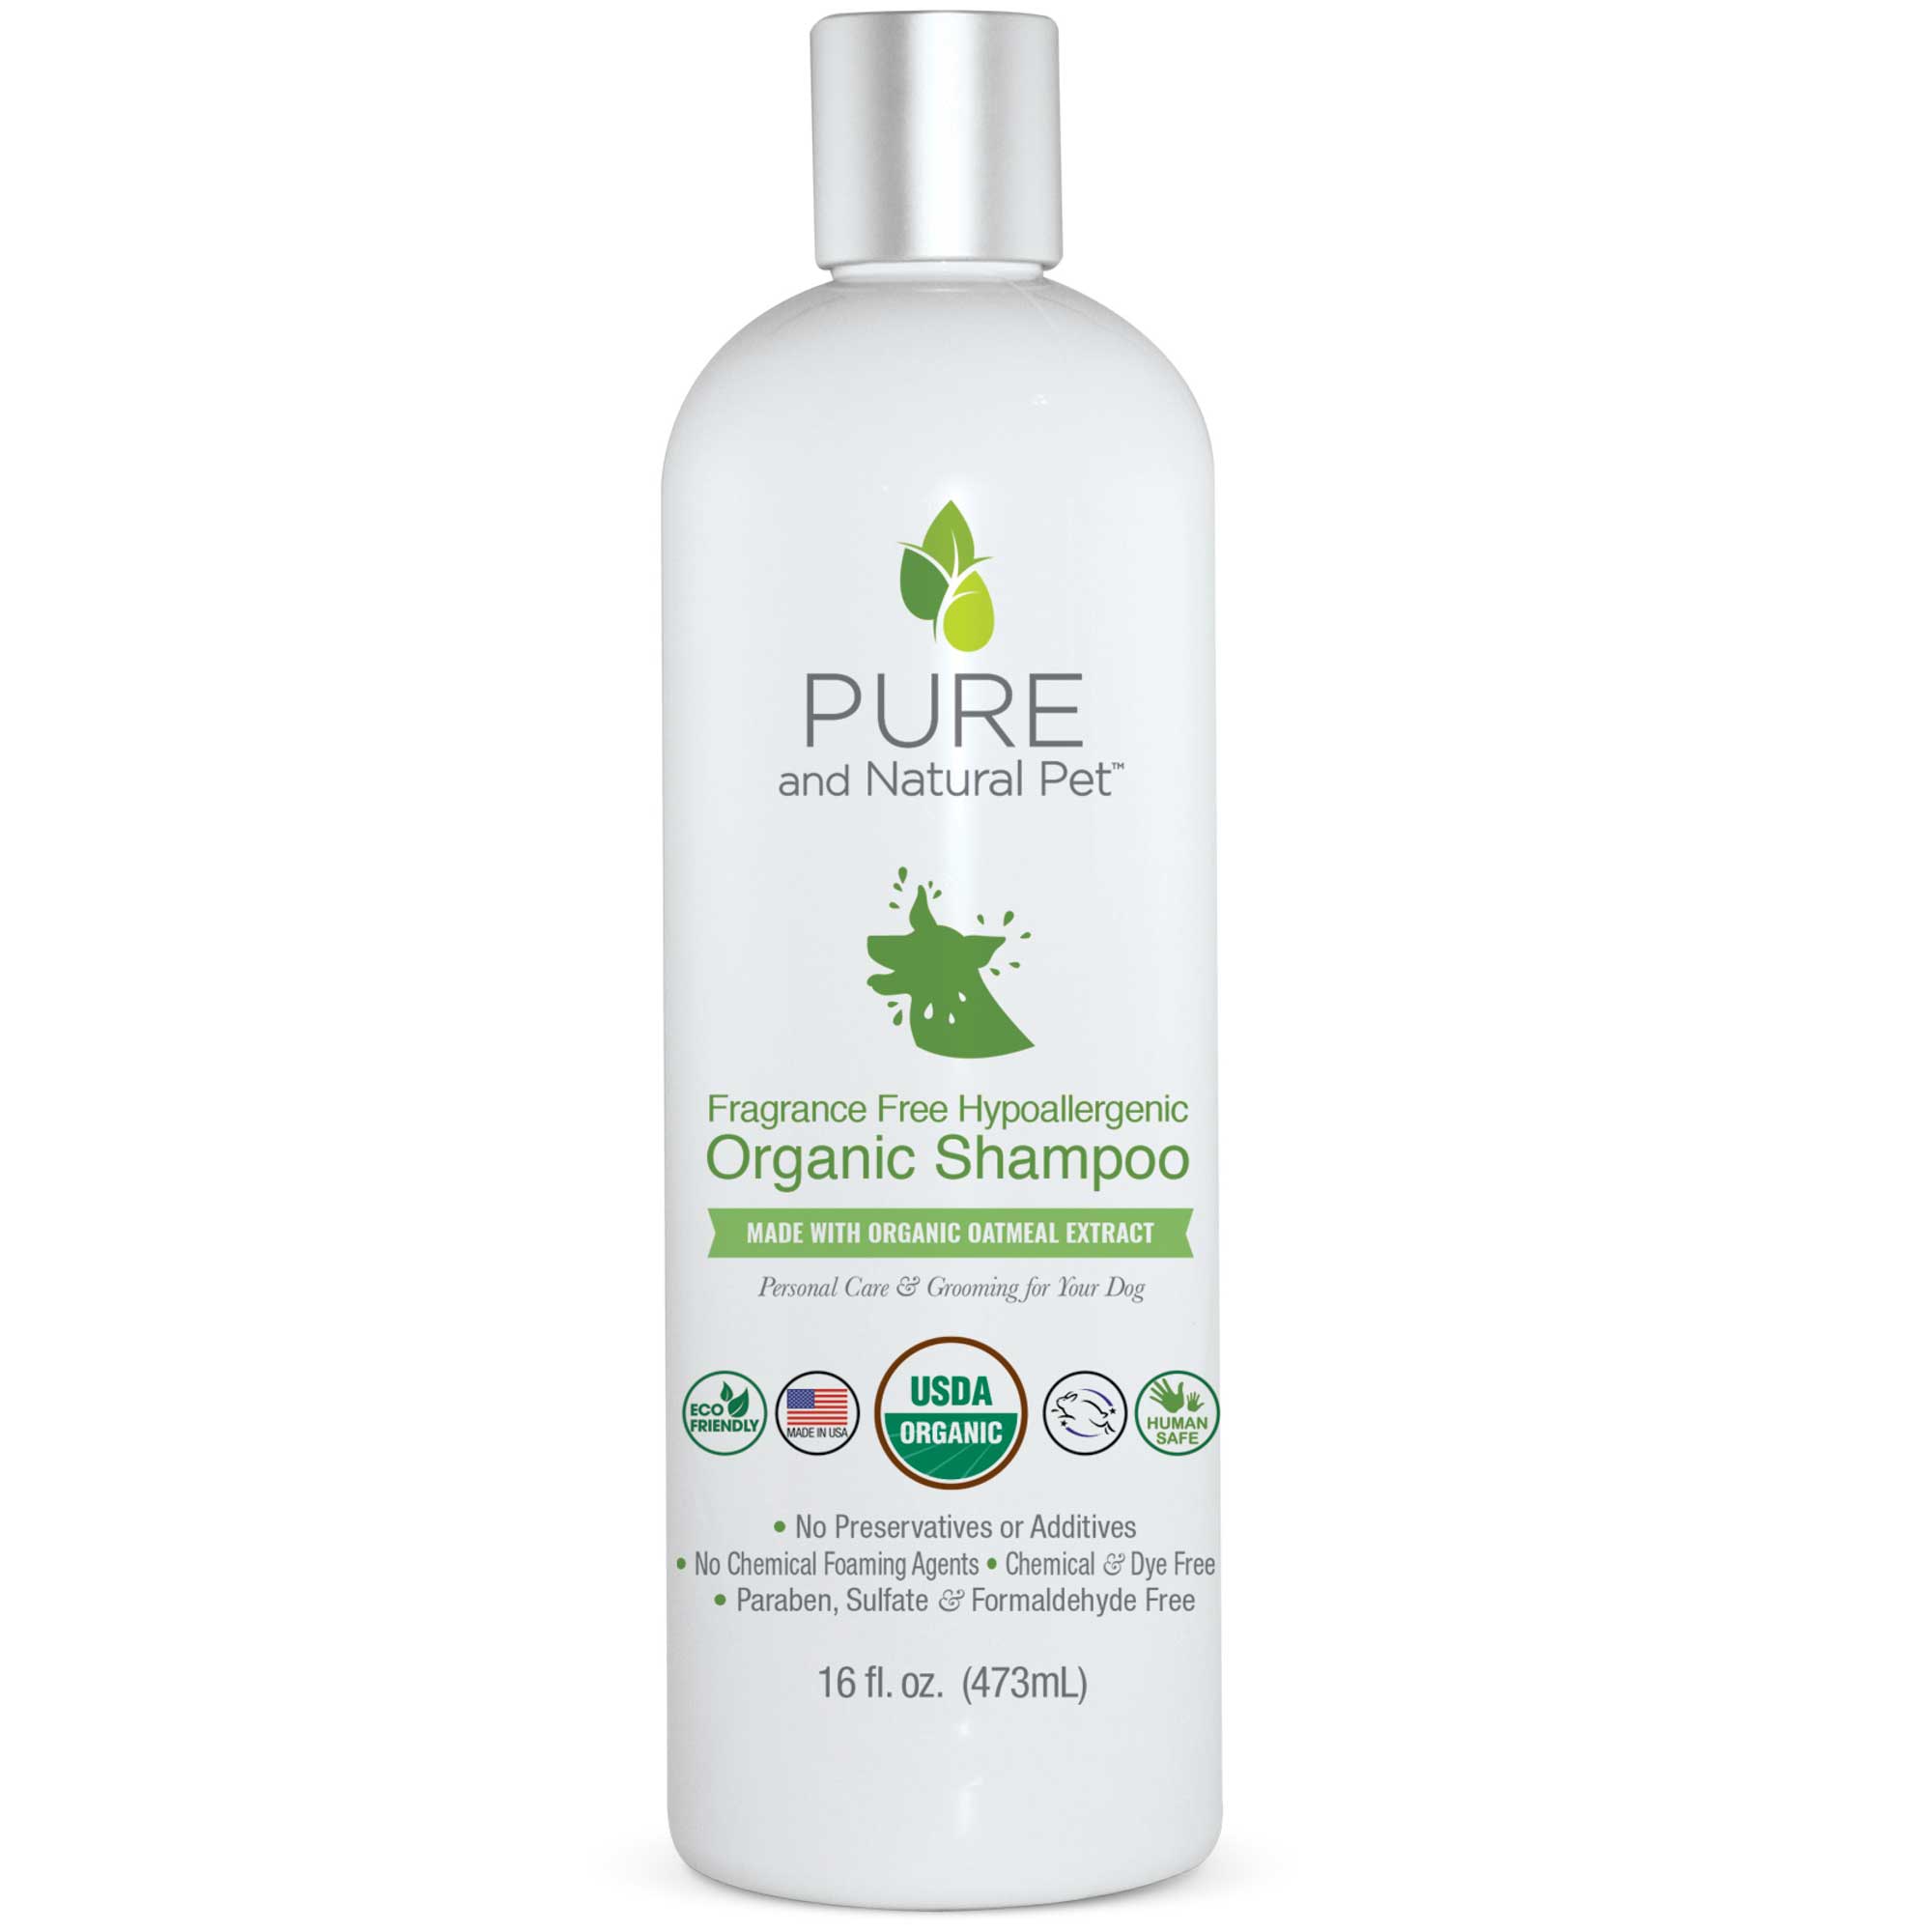 Pure and Natural Pet Organic Shampoo Usage